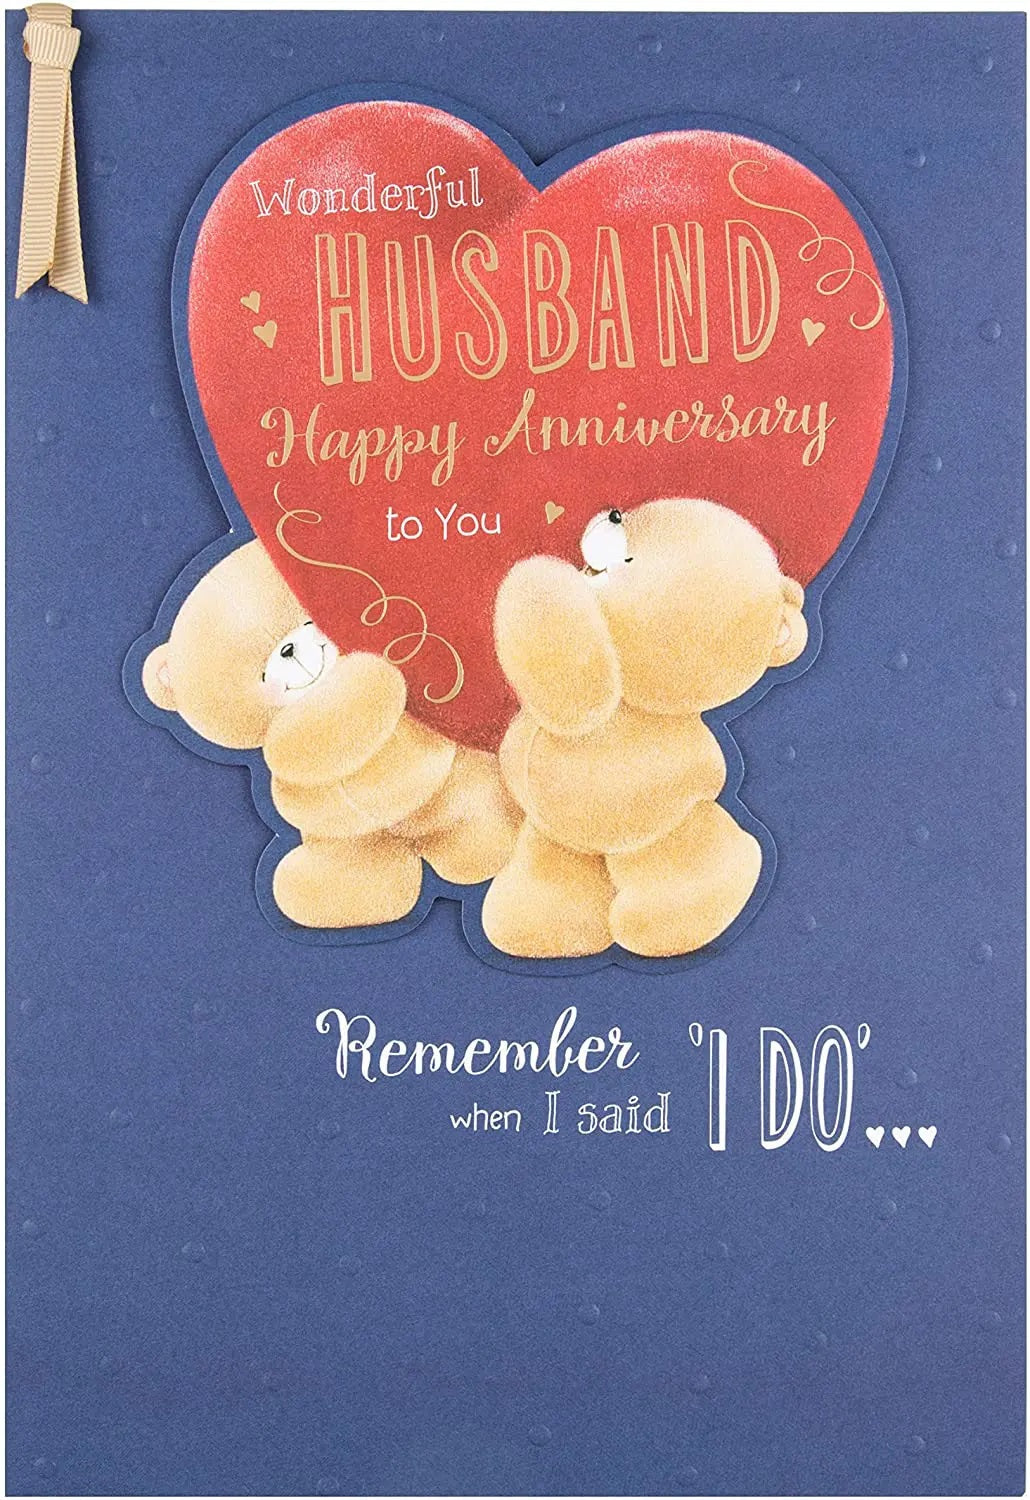 Husband Anniversary Card - Forever Friends - When I Said "I DO" 